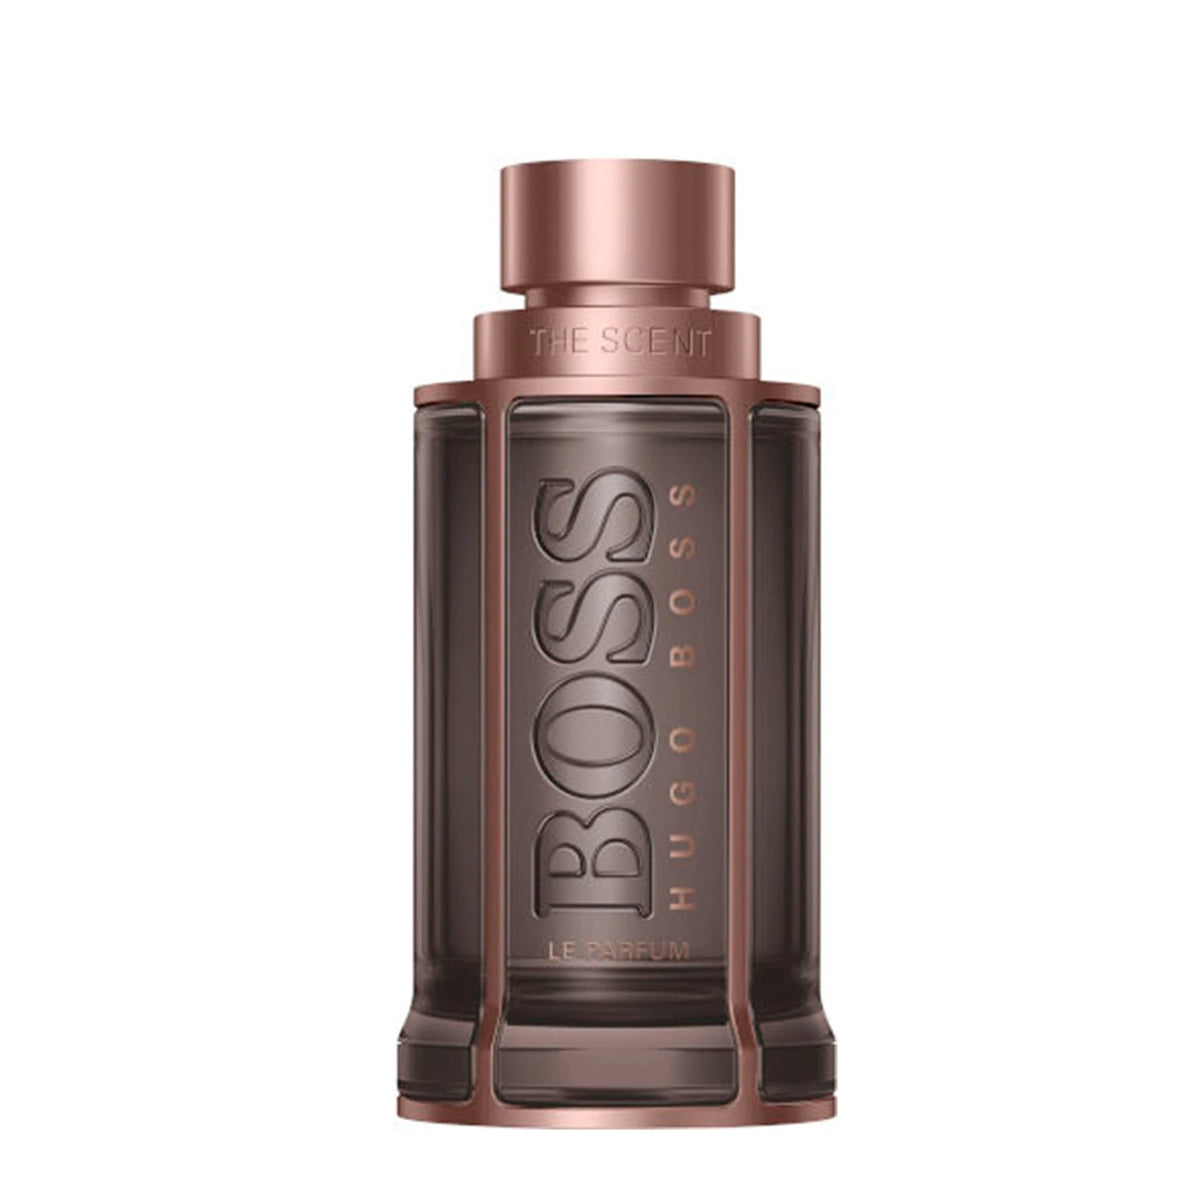 Hugo Boss The Scent Le Parfum 100Ml הוגו בוס בושם לגבר דה סנט פרפיום - GLAM42